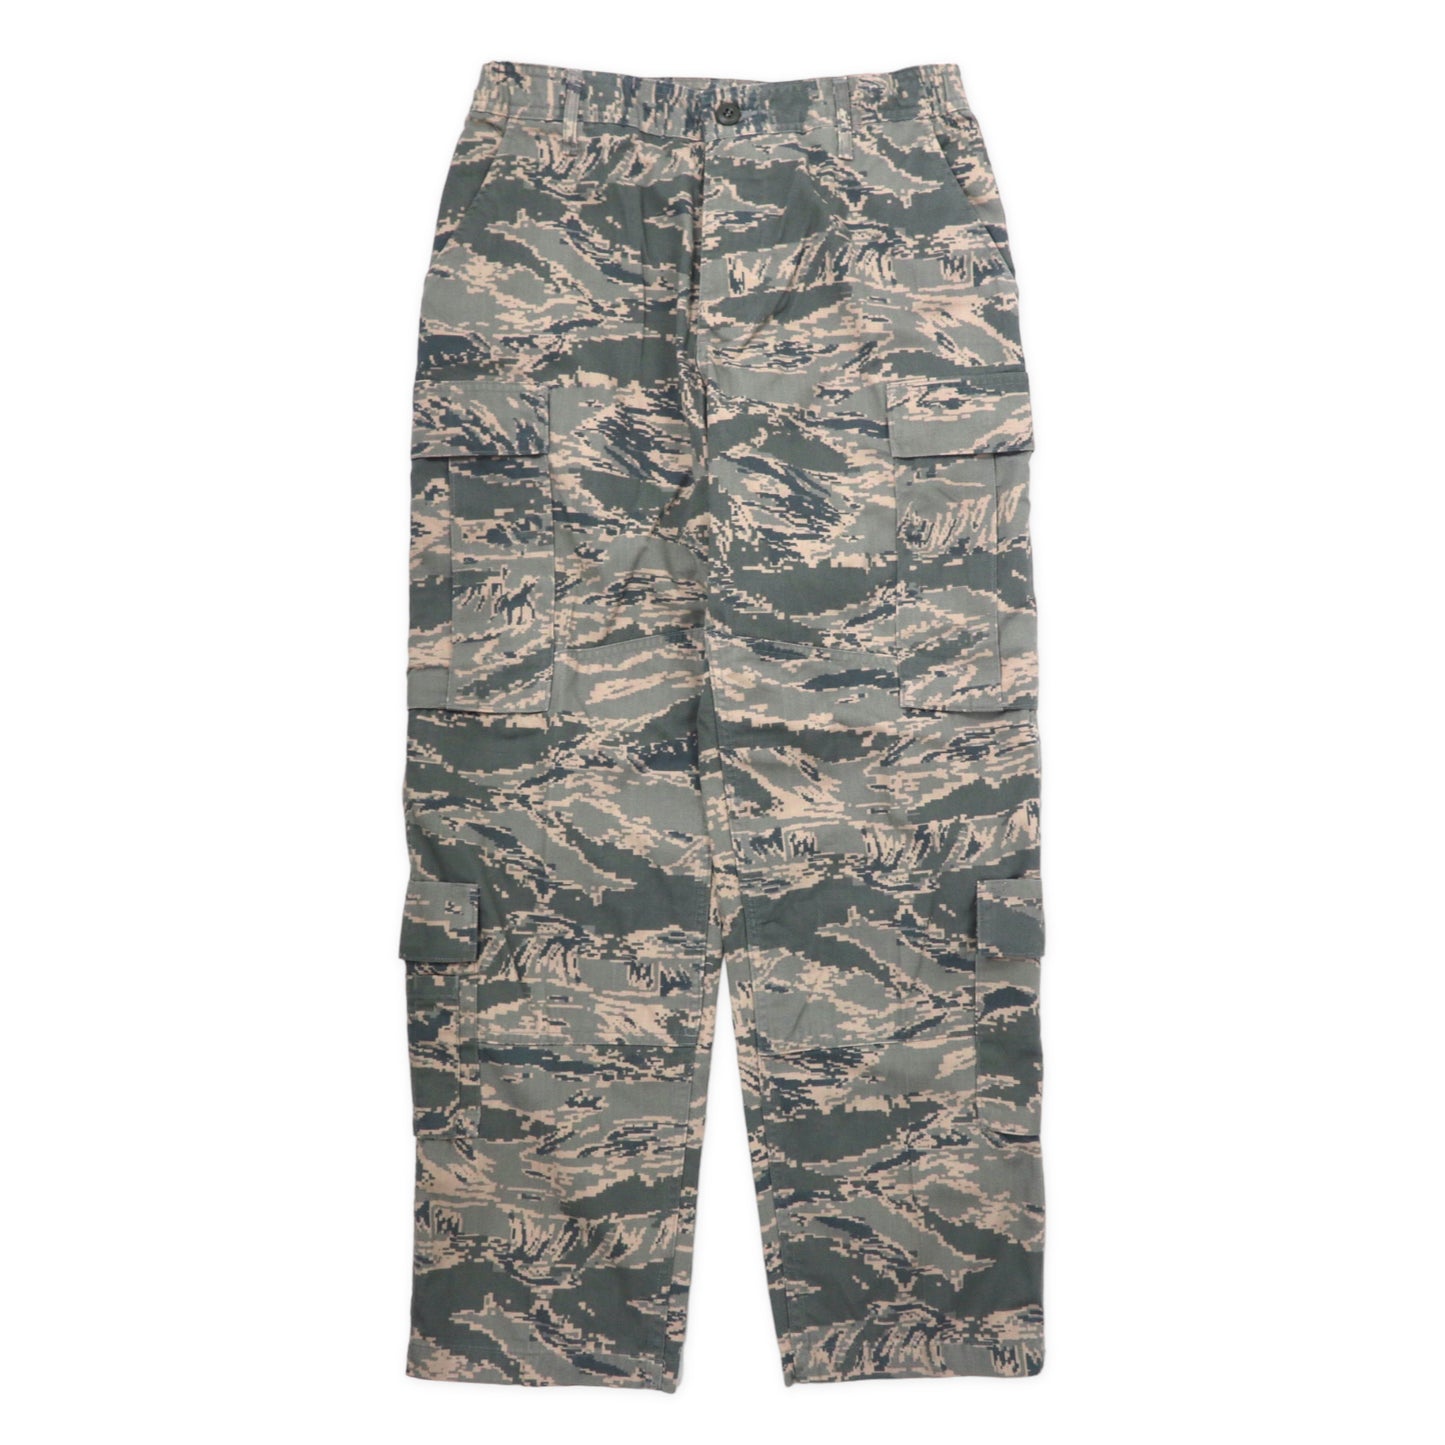 US Air Force Cargo Pants 32 KHAKI Cotton Digital Tiger Camo